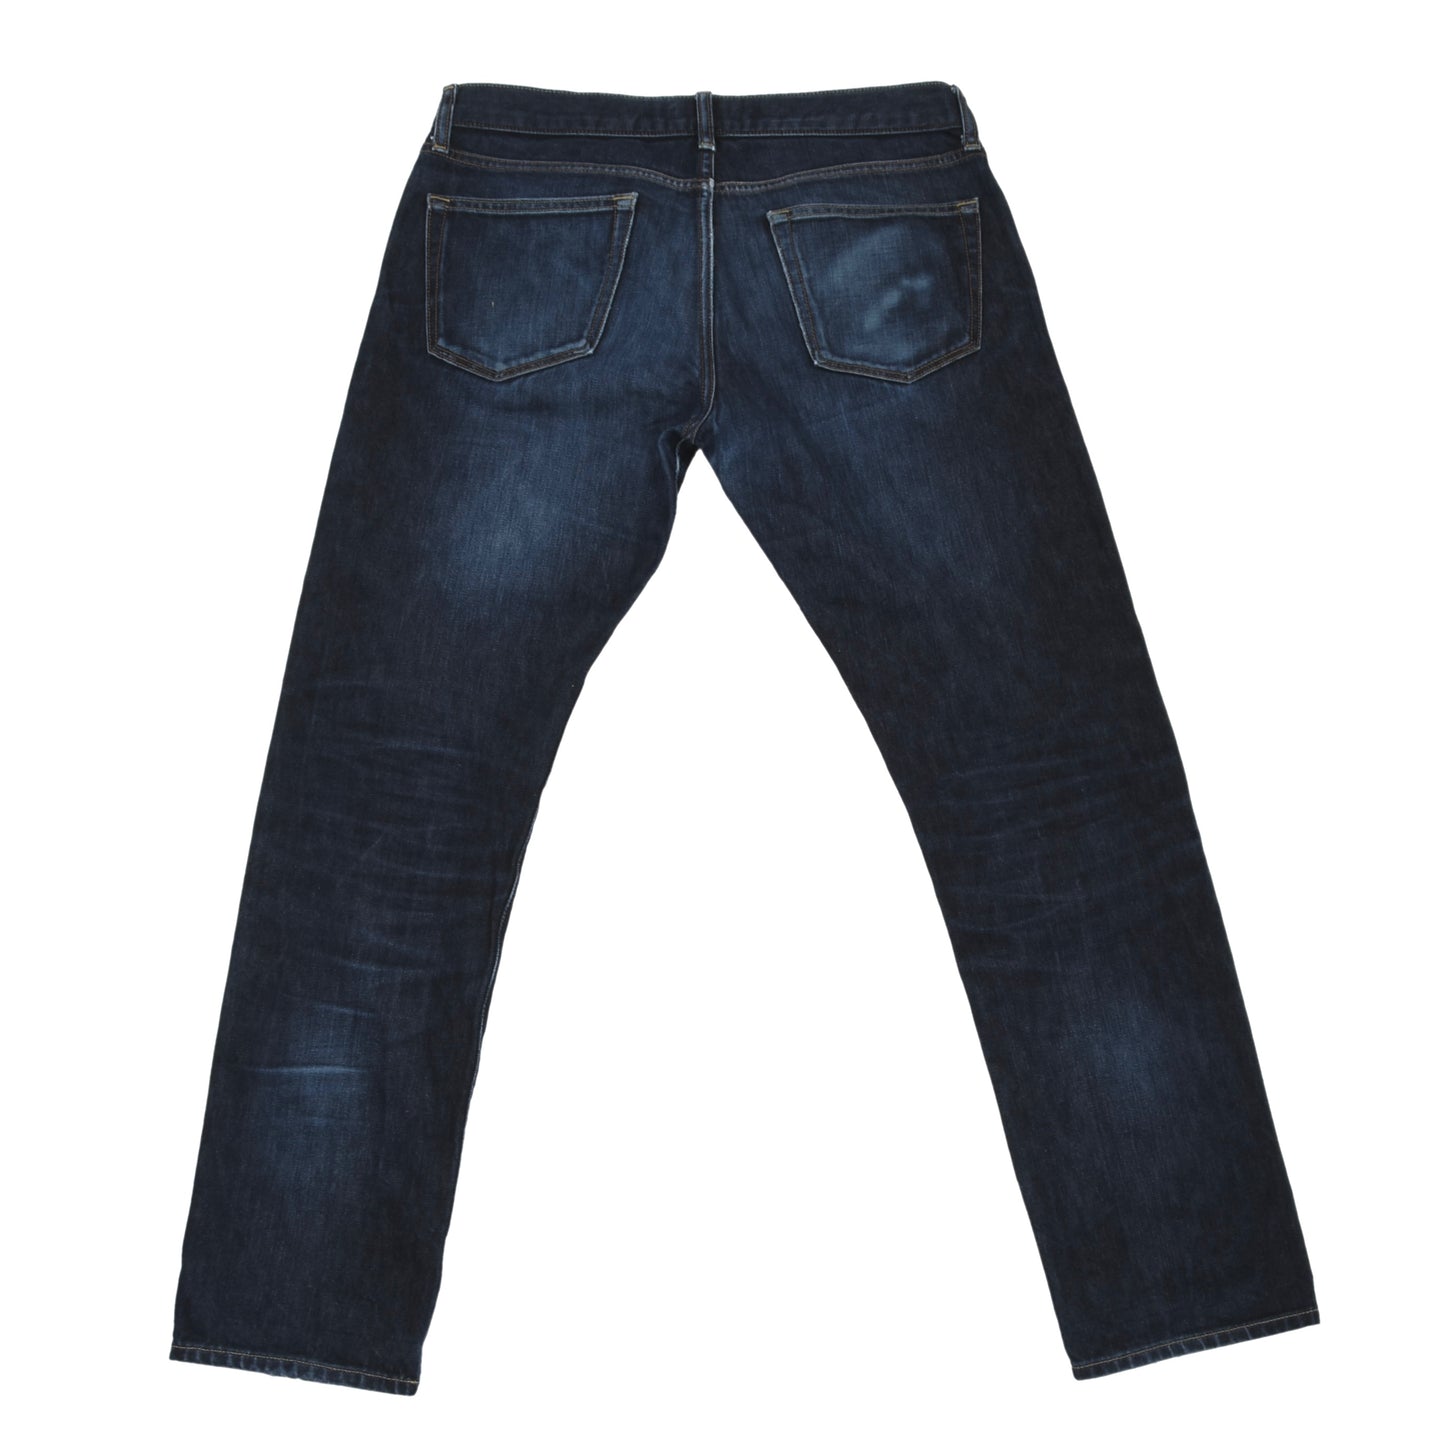 Uniqlo Selvedge Jeans Slim Straight Low Rise Größe W34 L32 - Blau